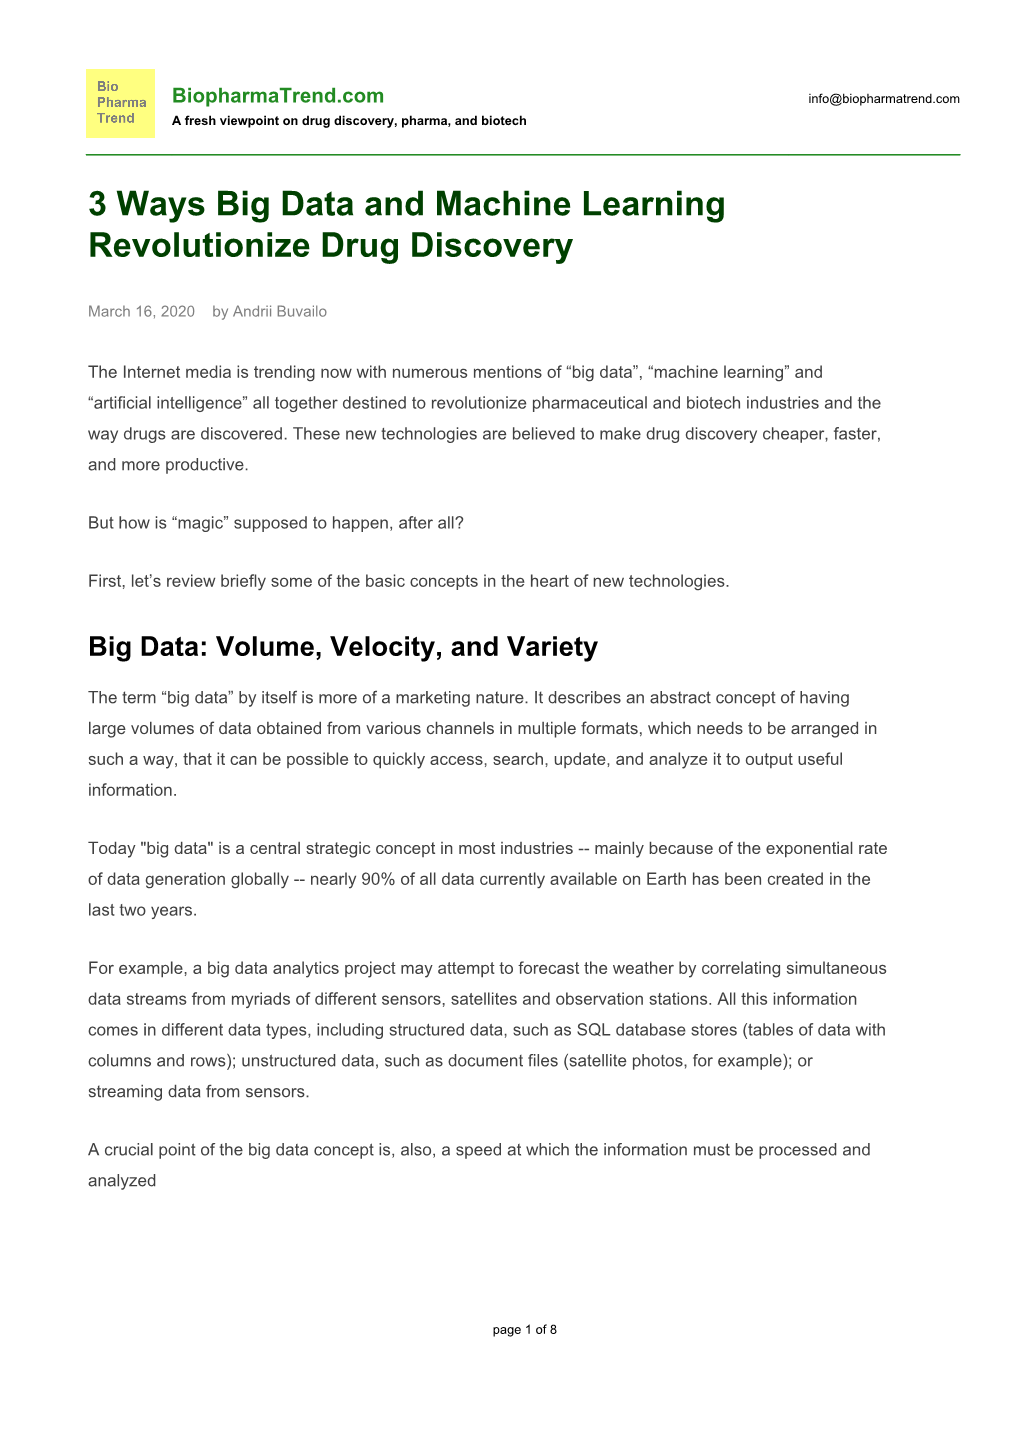 3 Ways Big Data and Machine Learning Revolutionize Drug Discovery